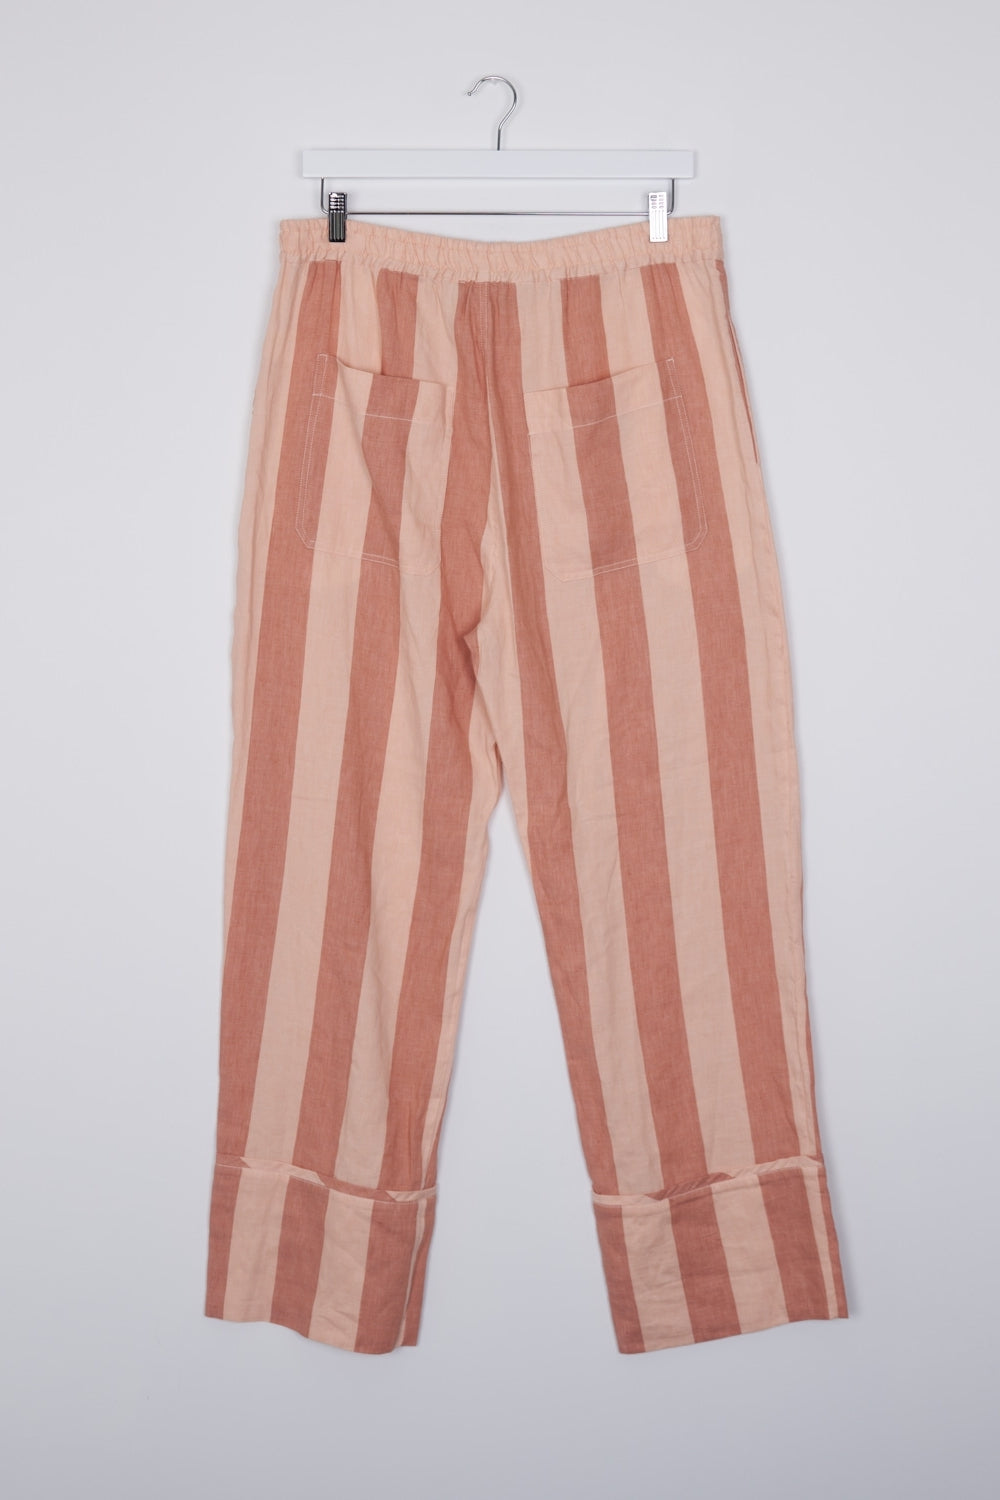 Lee Mathews Pink Striped Linen Blend Pants 12